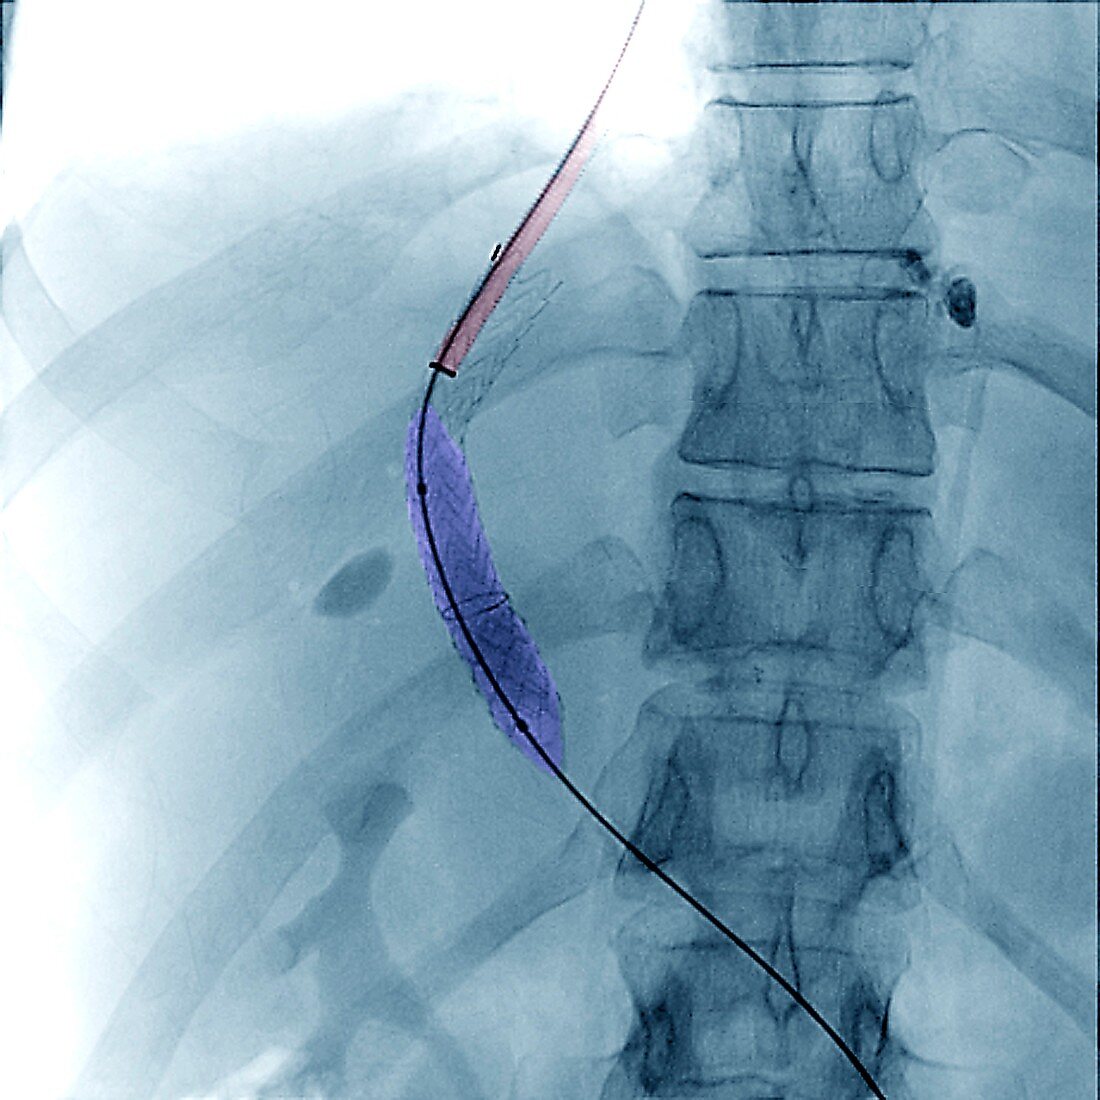 Portal vein surgery, X-ray